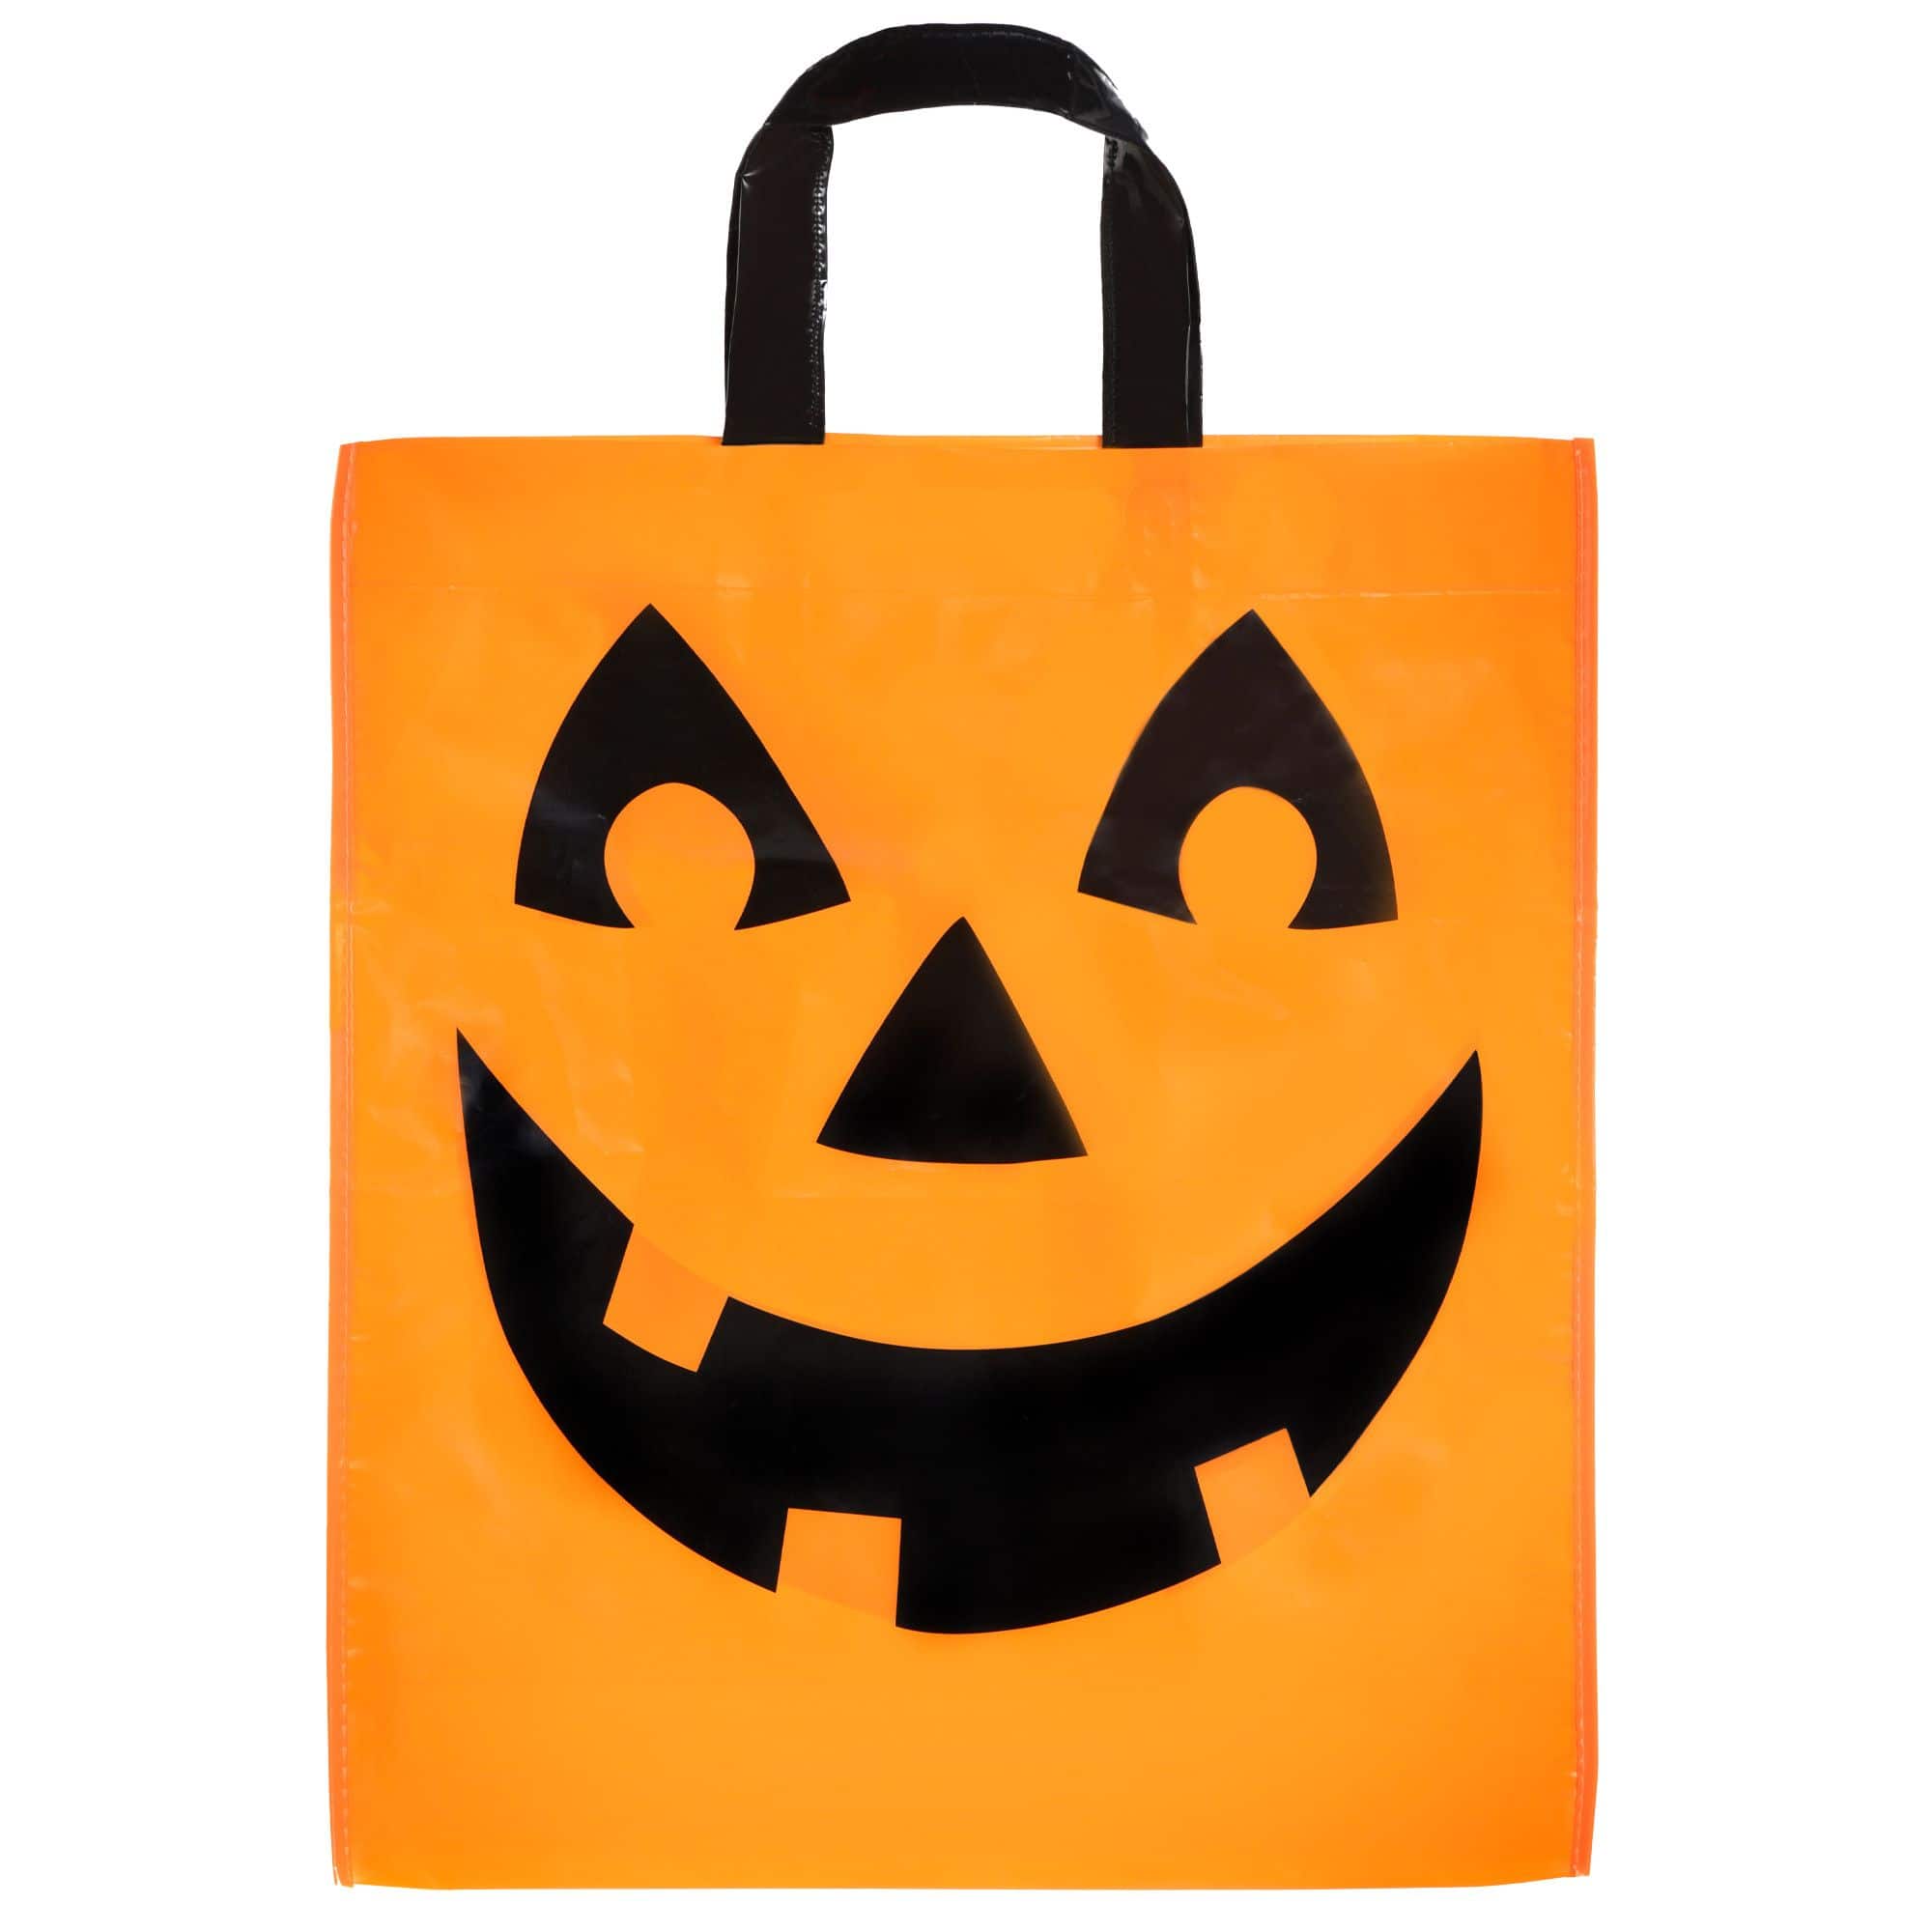 Jack-O'-Lantern Fabric Treat Bag, Black/Orange, 14-in, for Trick or Treating